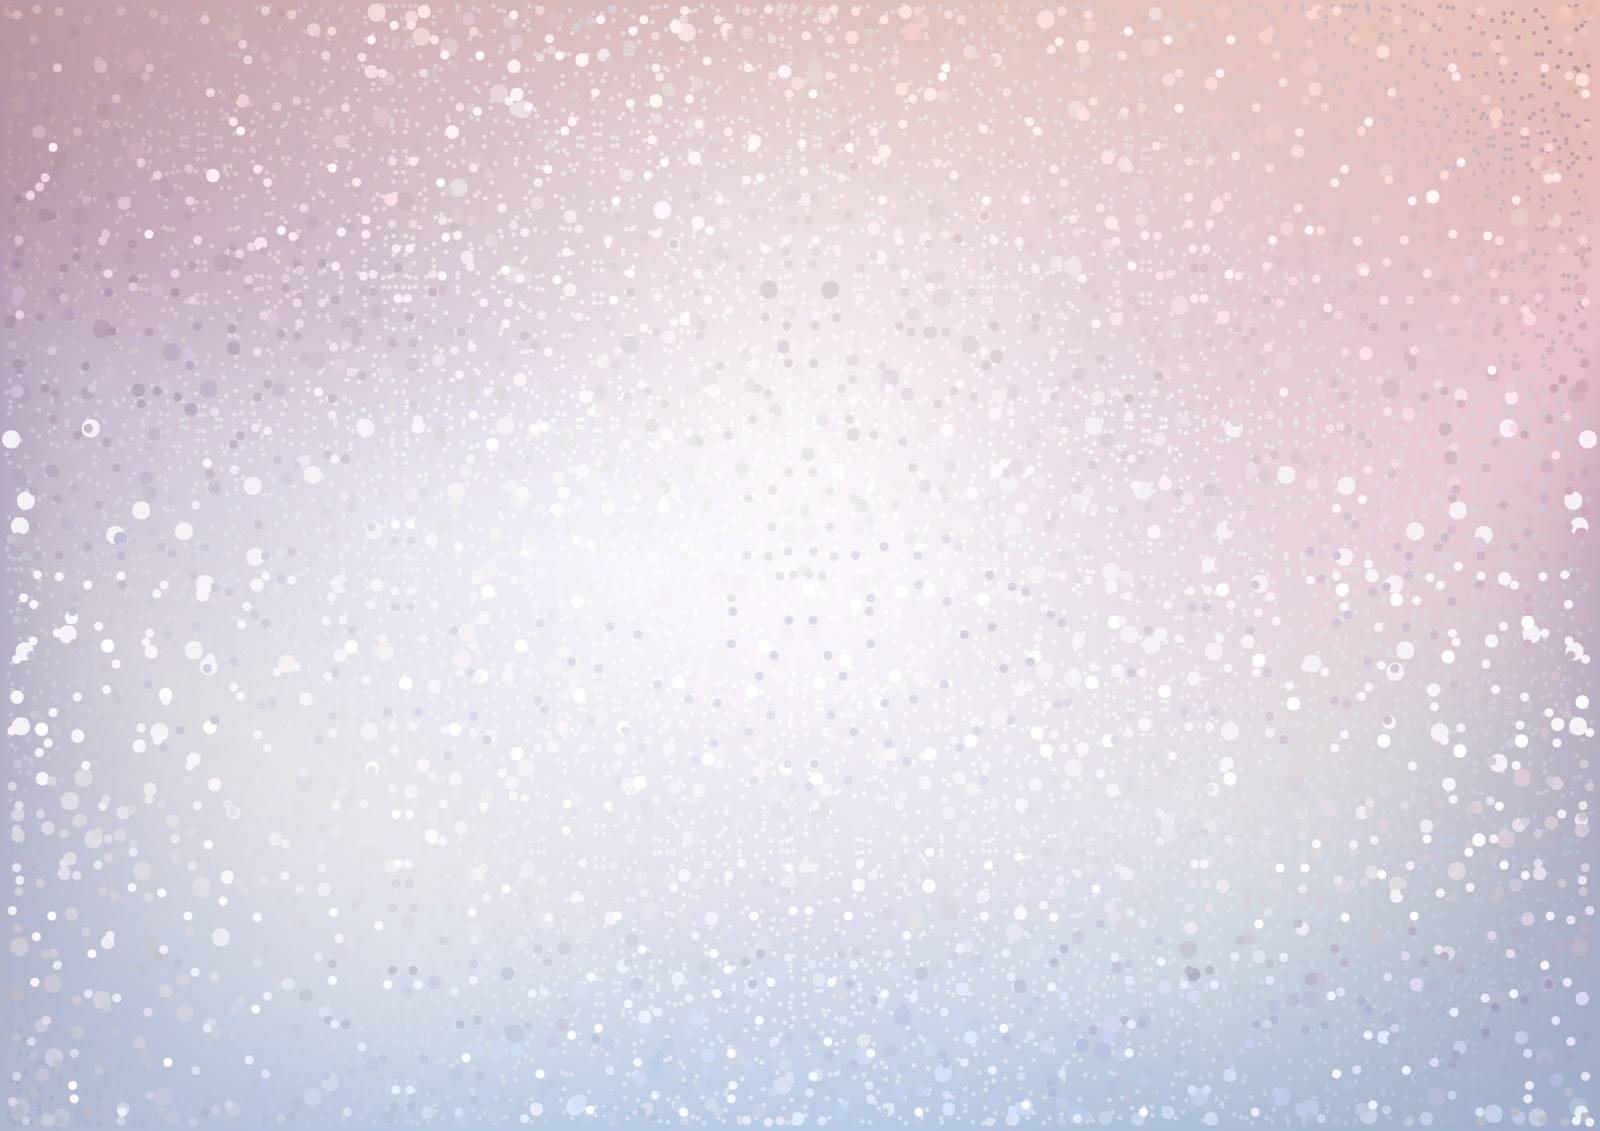 Defocused Glitter Lights Background by illustratorCZ